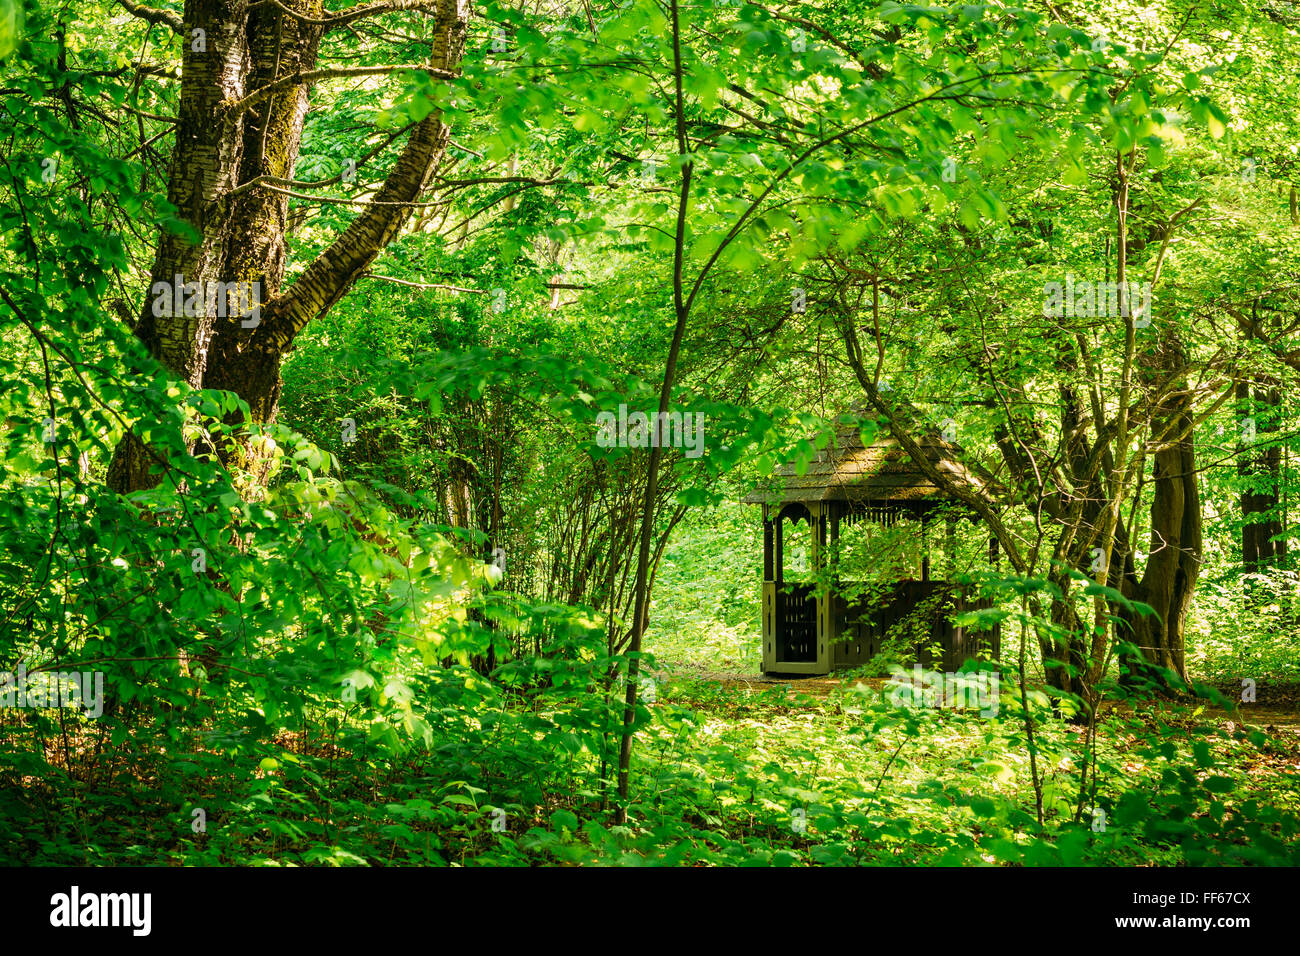 Old wooden gazebo in green spring summer garden park forest. Garden pergola with forest in background. Stock Photo